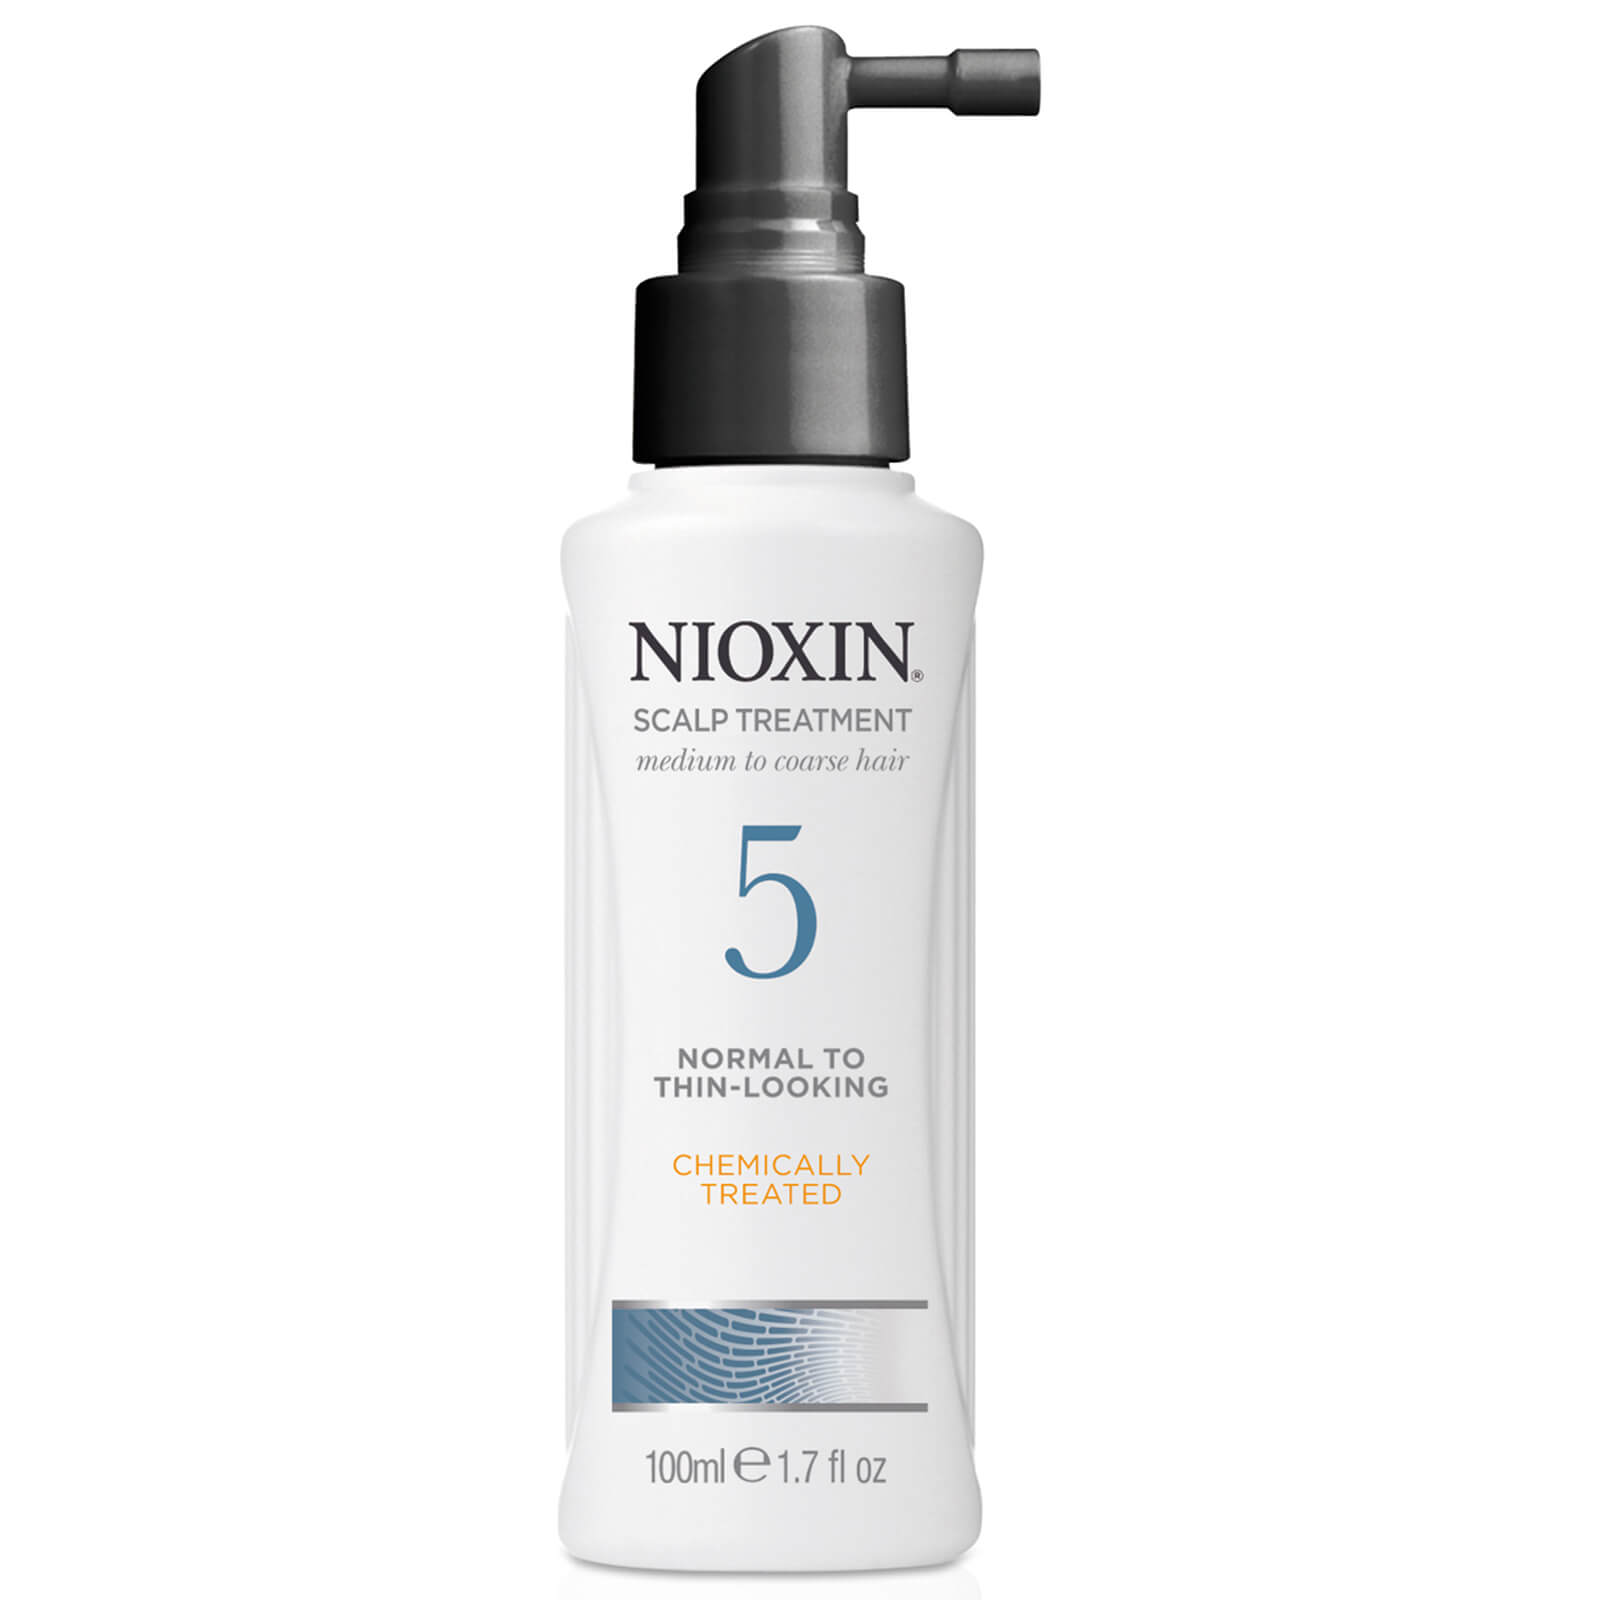 Kit Nioxin System 5 - cabello medio/grueso natural/teñido (3 productos)